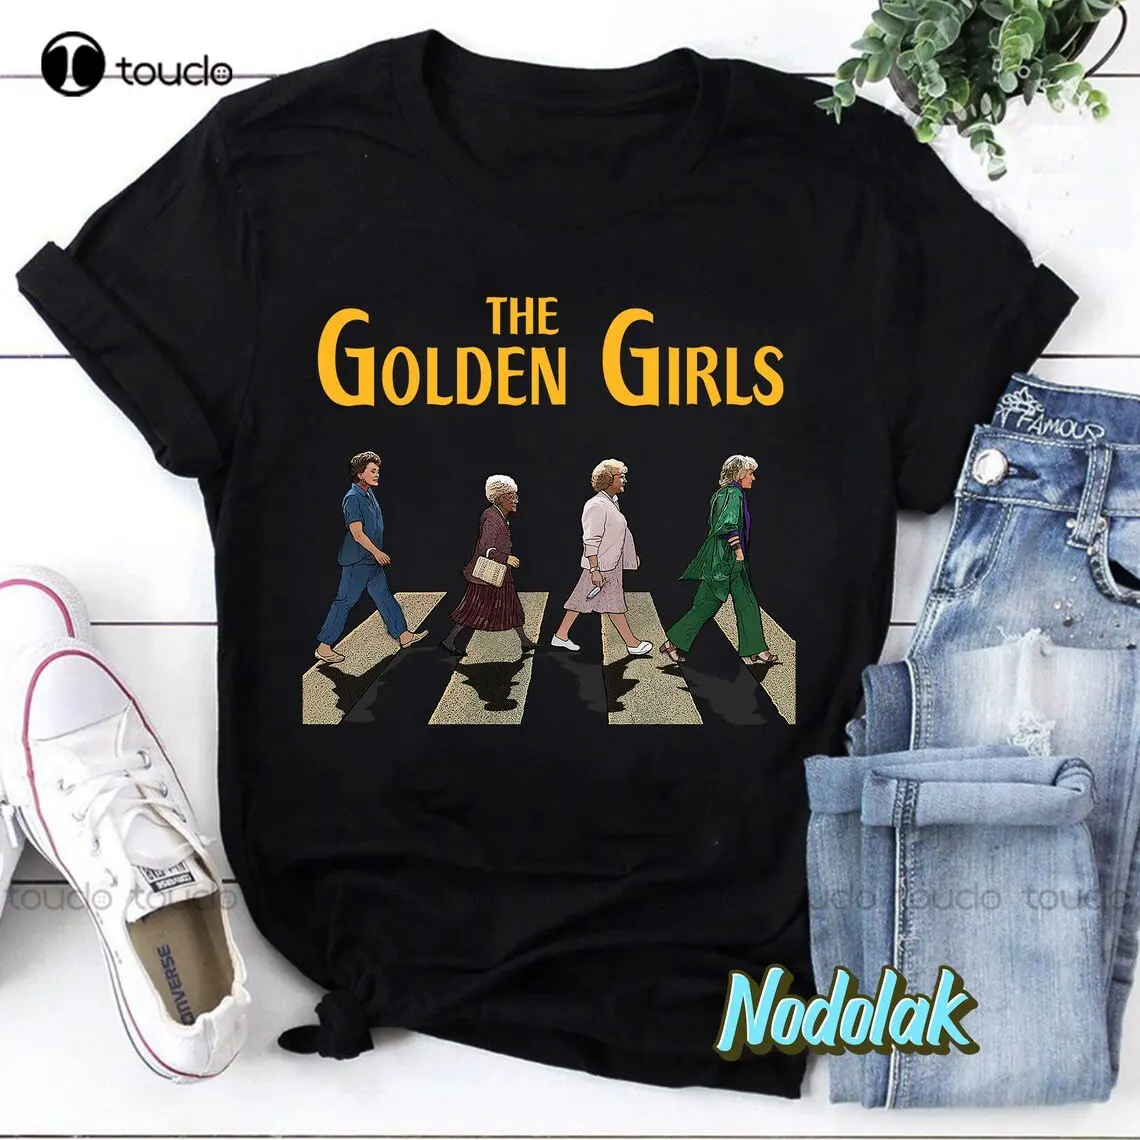 Golden Girls Crossing Road T-Shirt The Stay Golden Shirt The Golden Girls Shirt Funny Art Streetwear Cartoon Tee Custom Gift